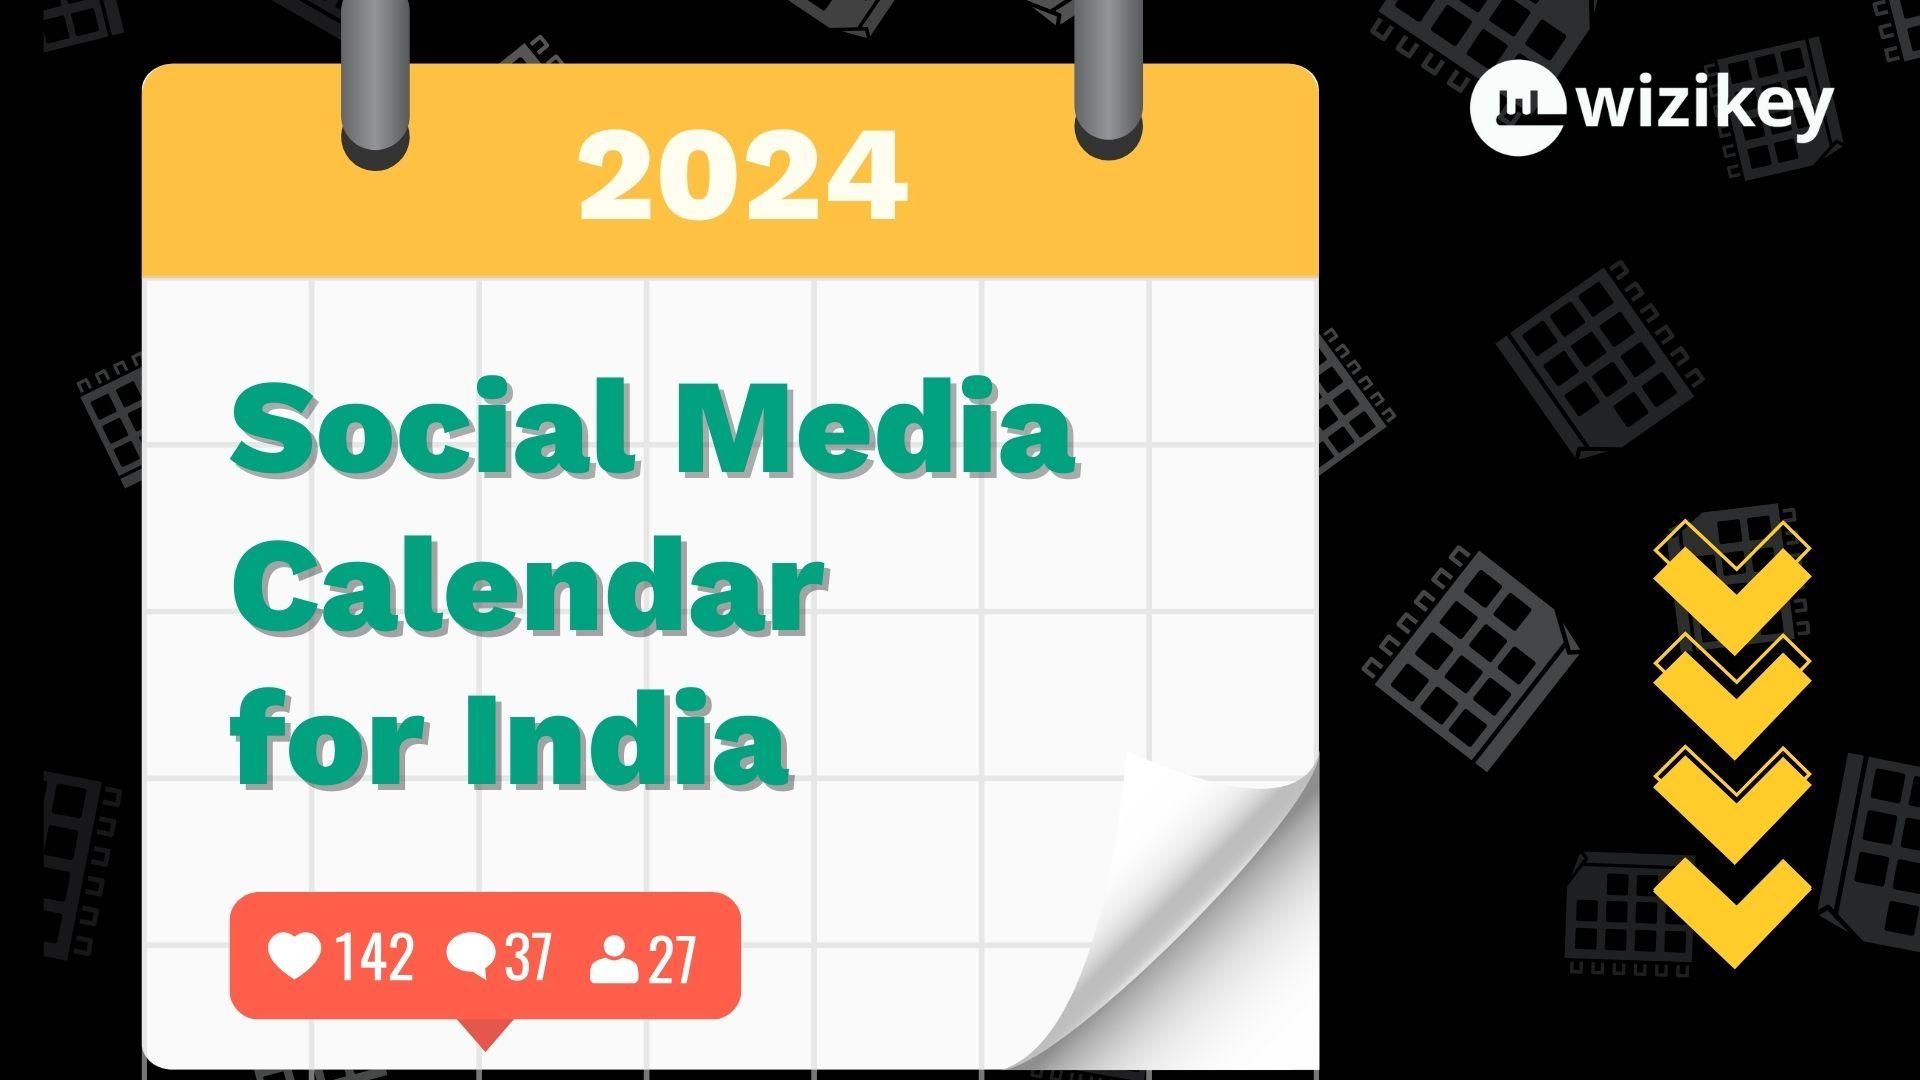 The Ultimate Social Media Calendar for 2024 for India